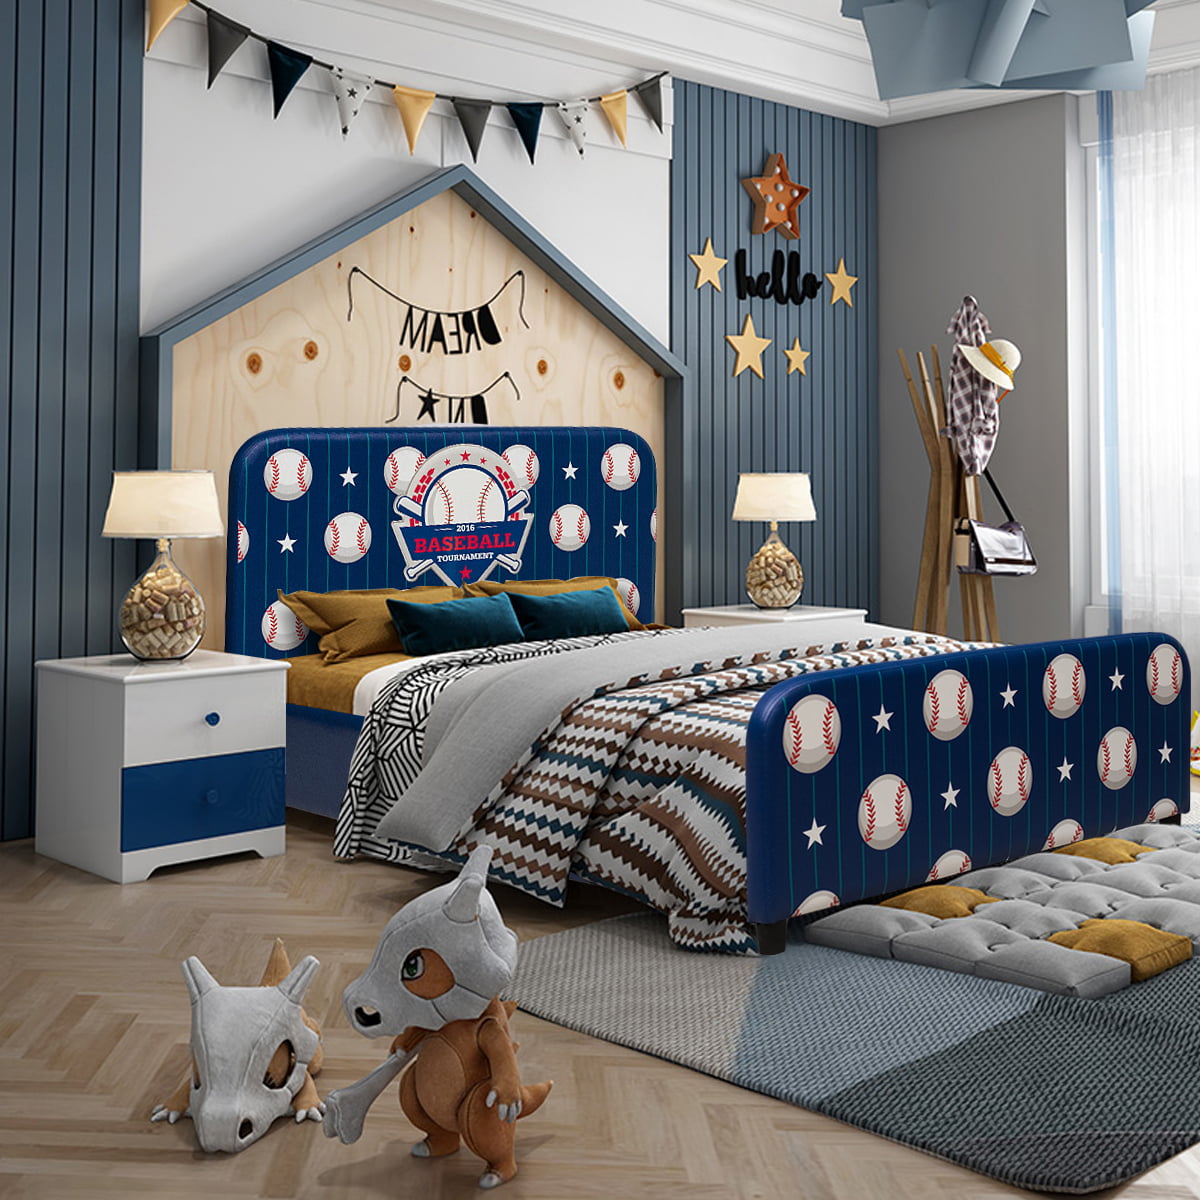 children's bed and bedroom furniture